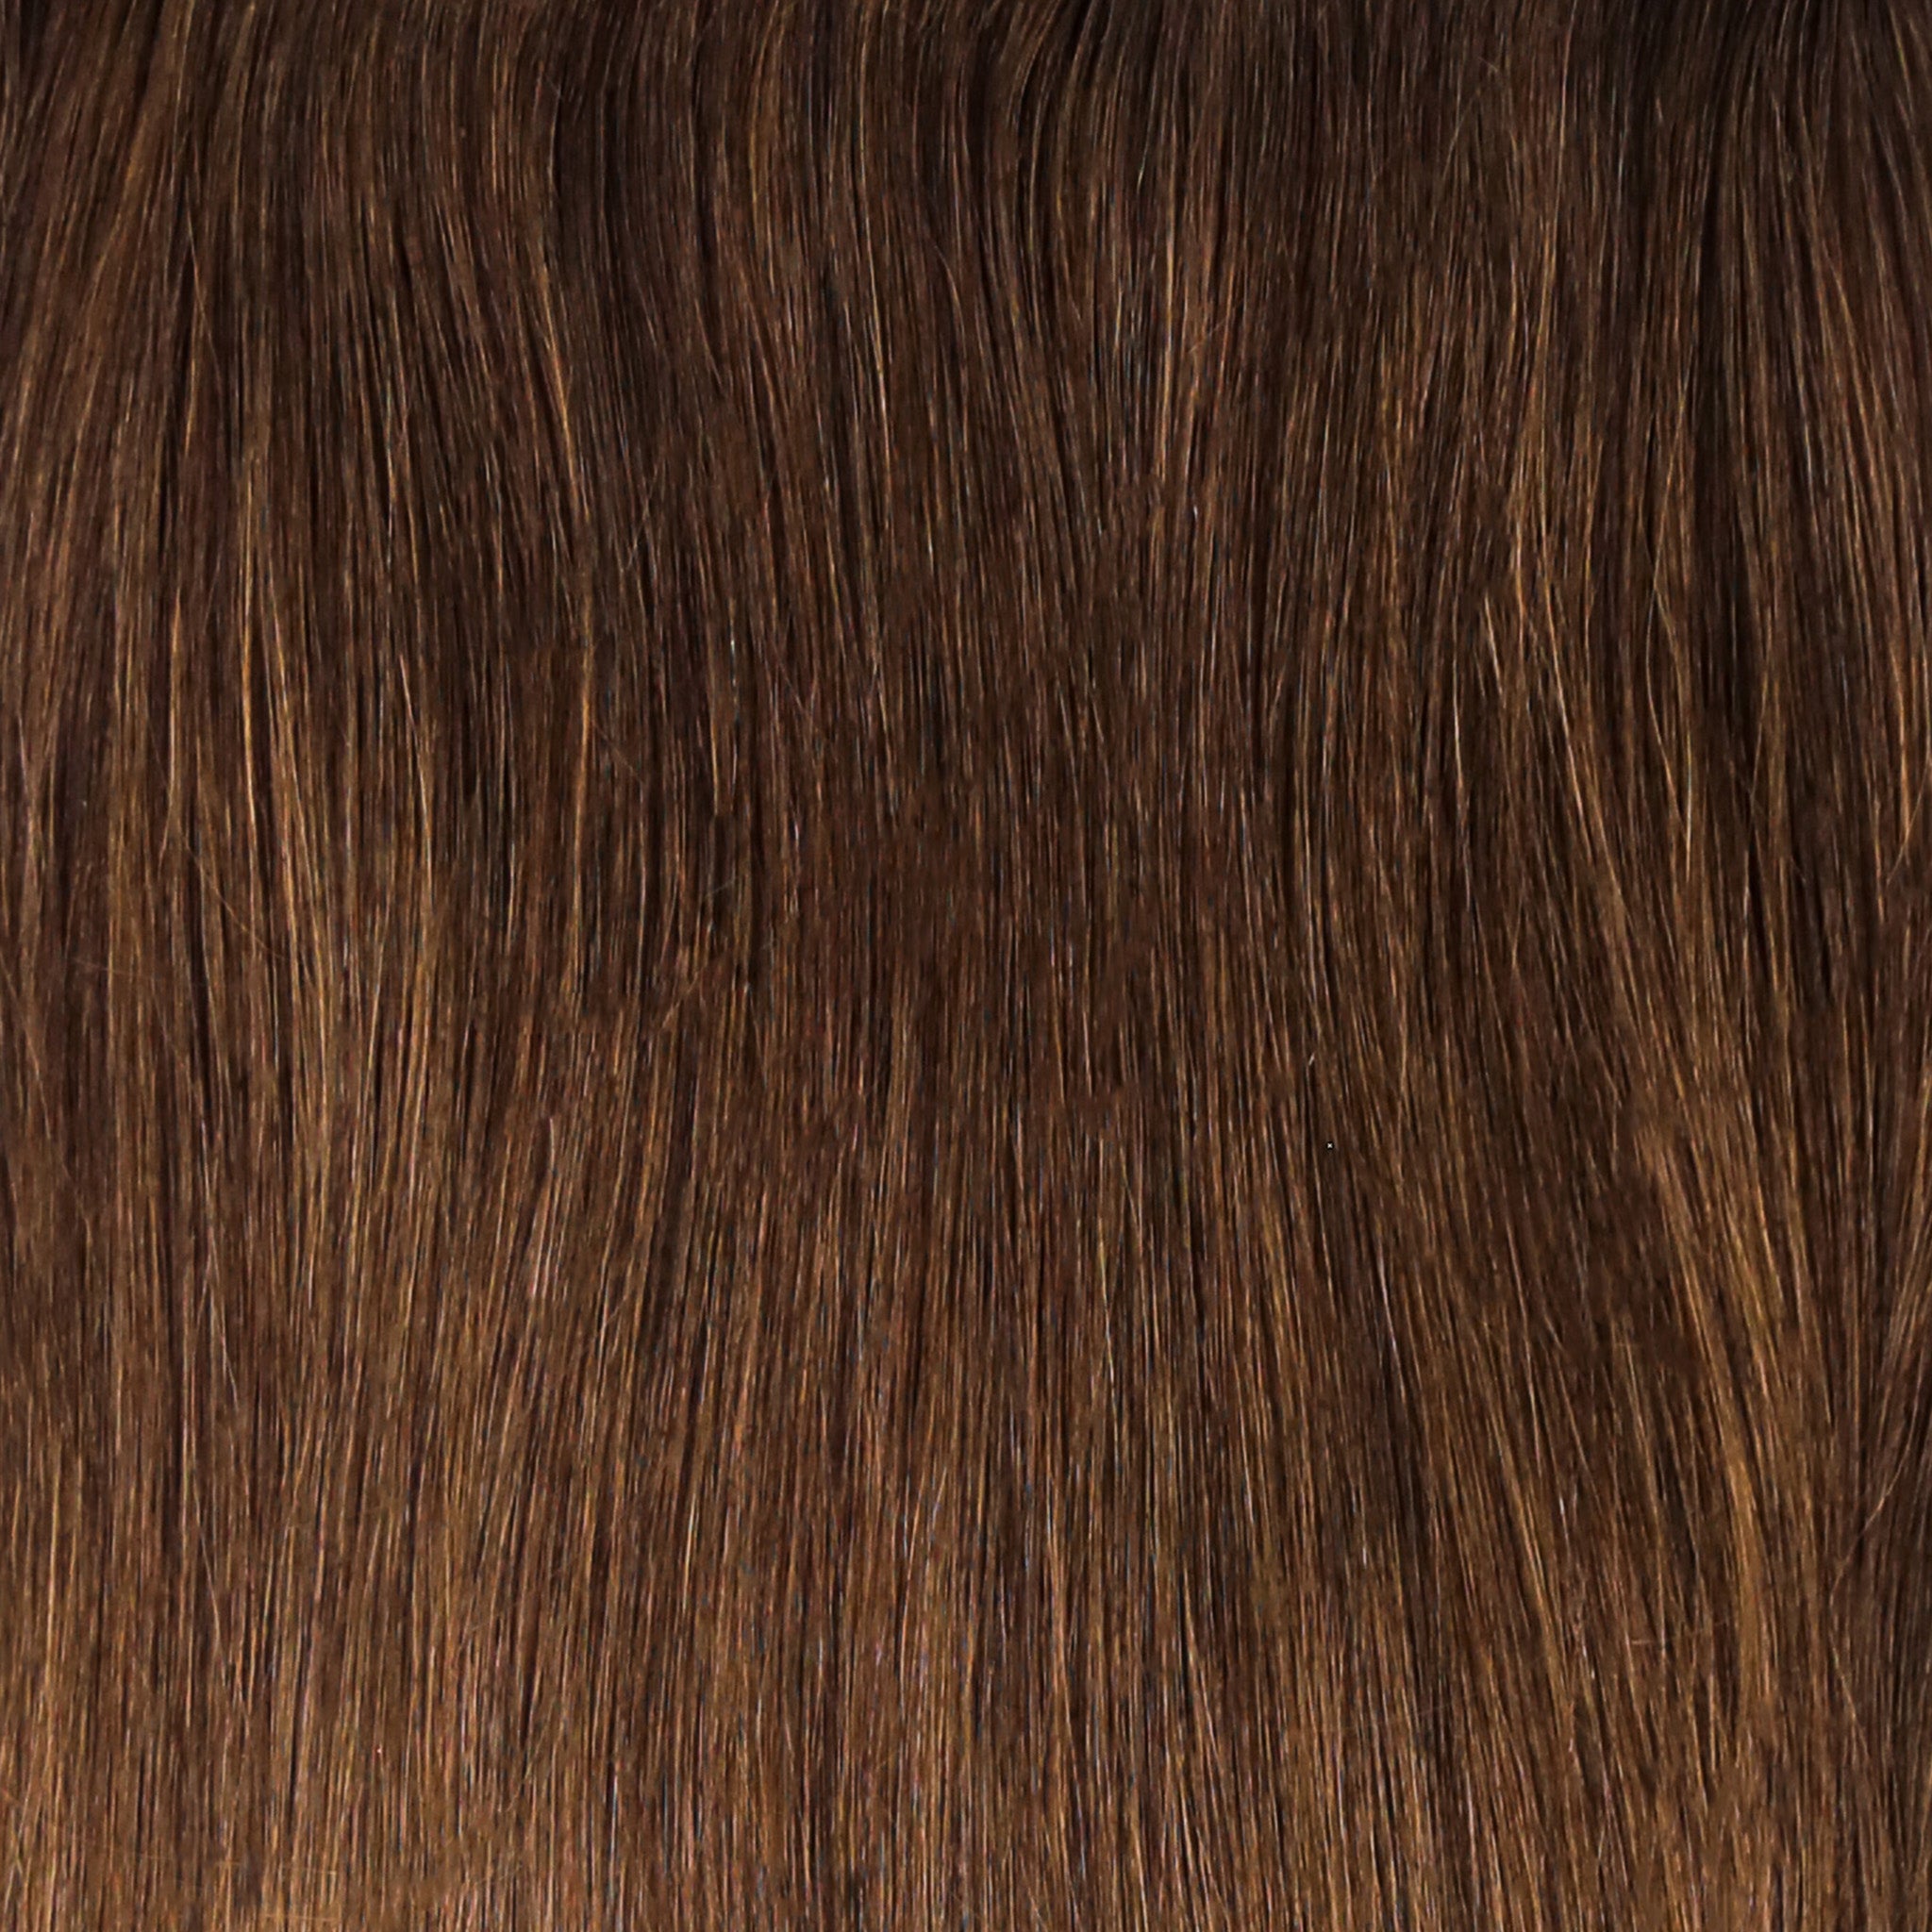 #2 Dark Brown Ultra Narrow Clip In Hair Extensions